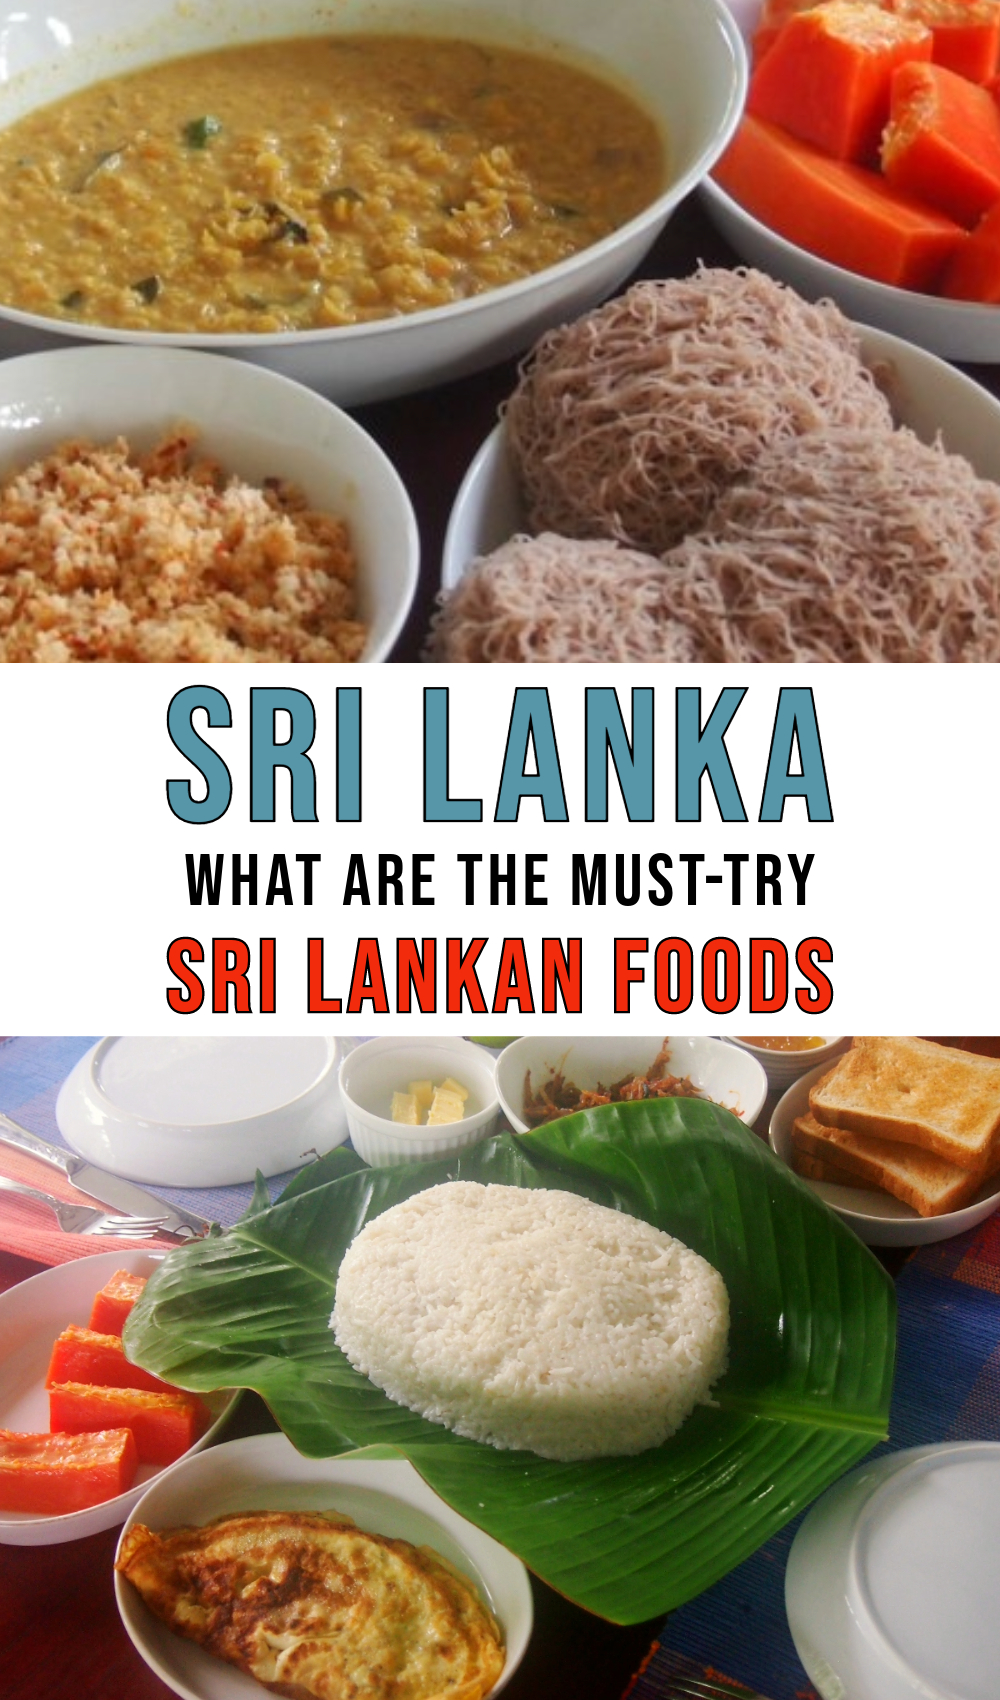 Sri Lankan food photos